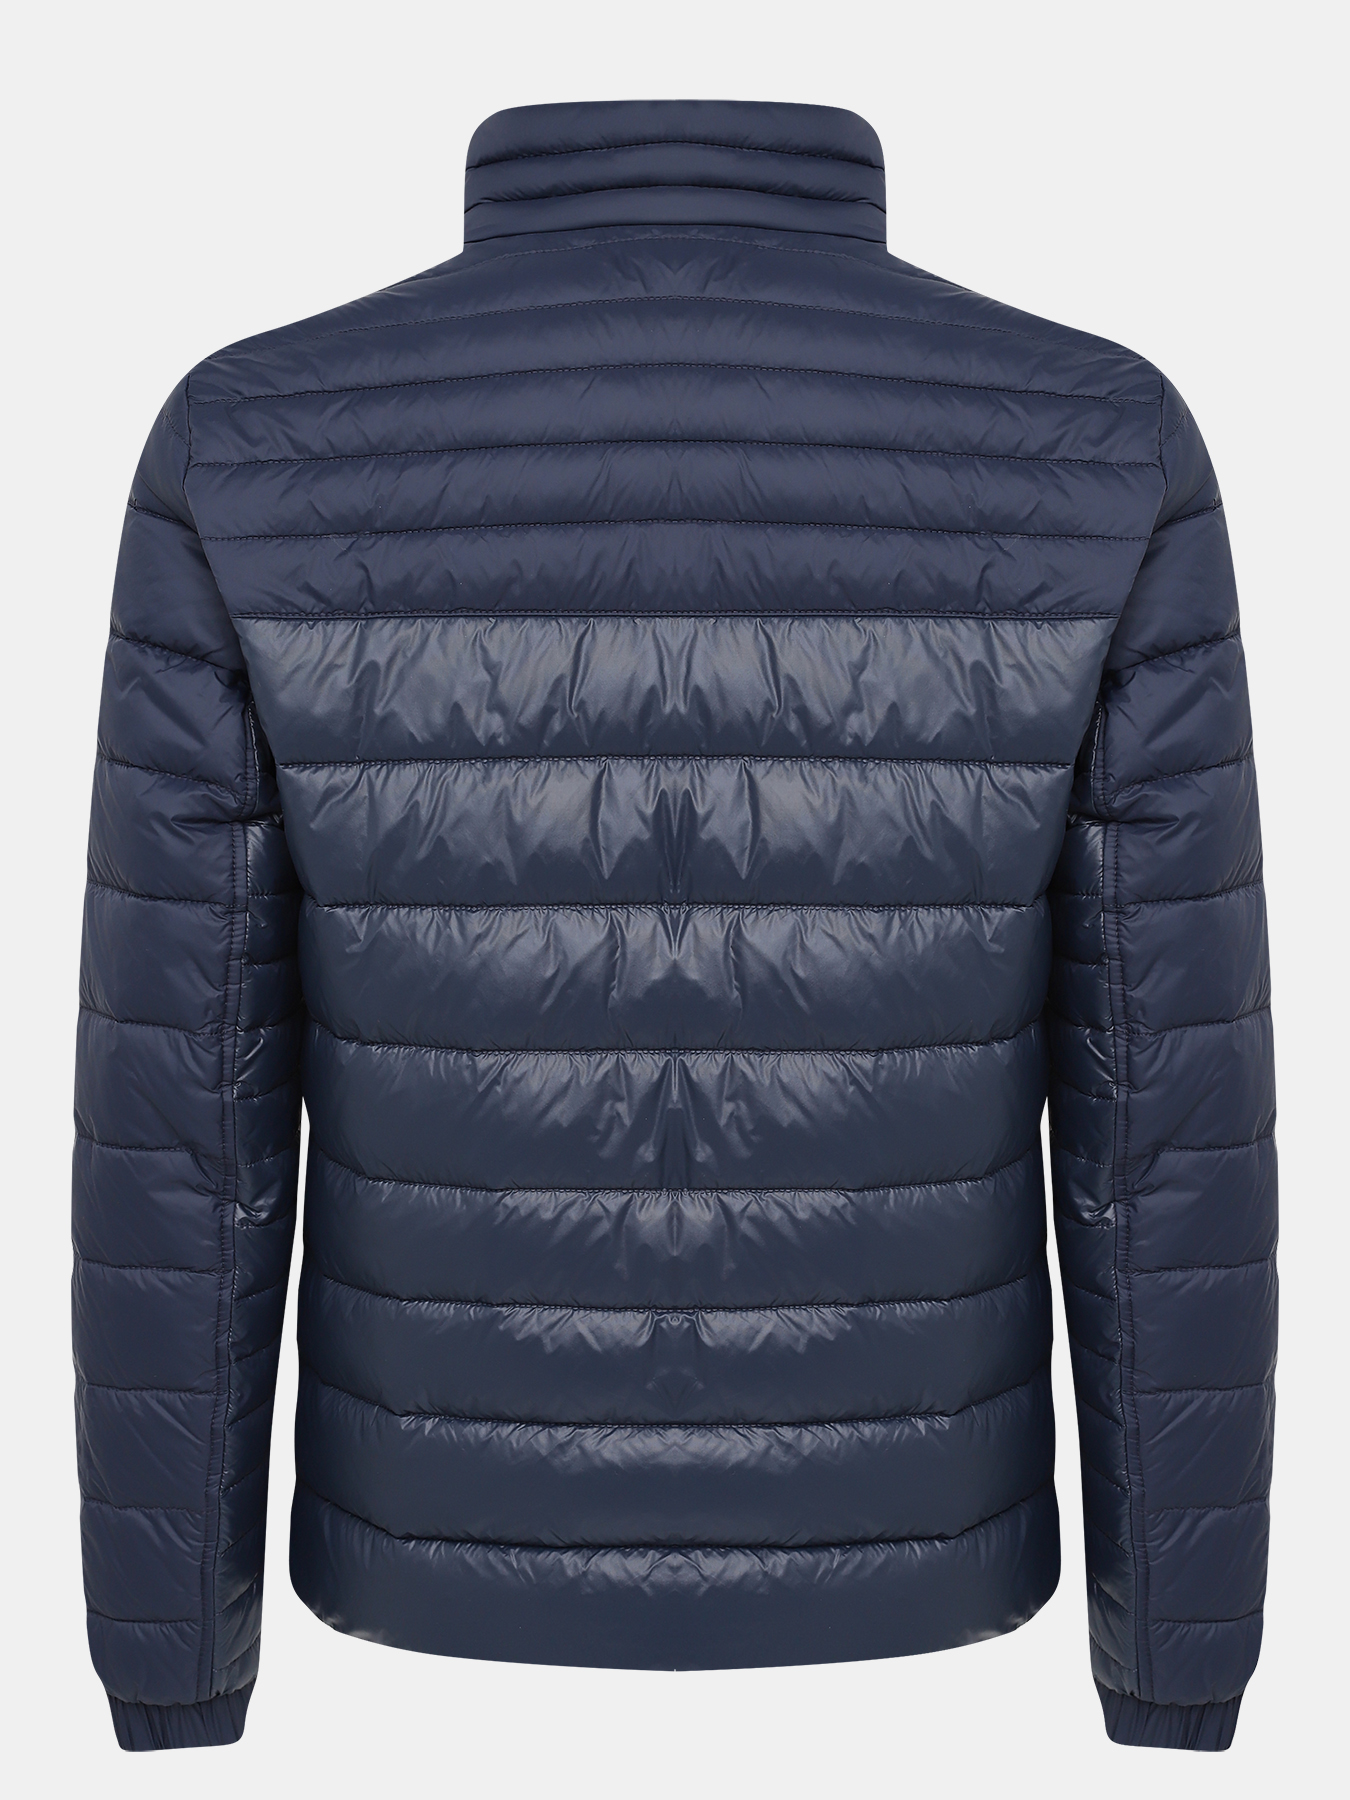 Куртка Oden BOSS 434079-028, цвет темно-синий, размер 54 - фото 5